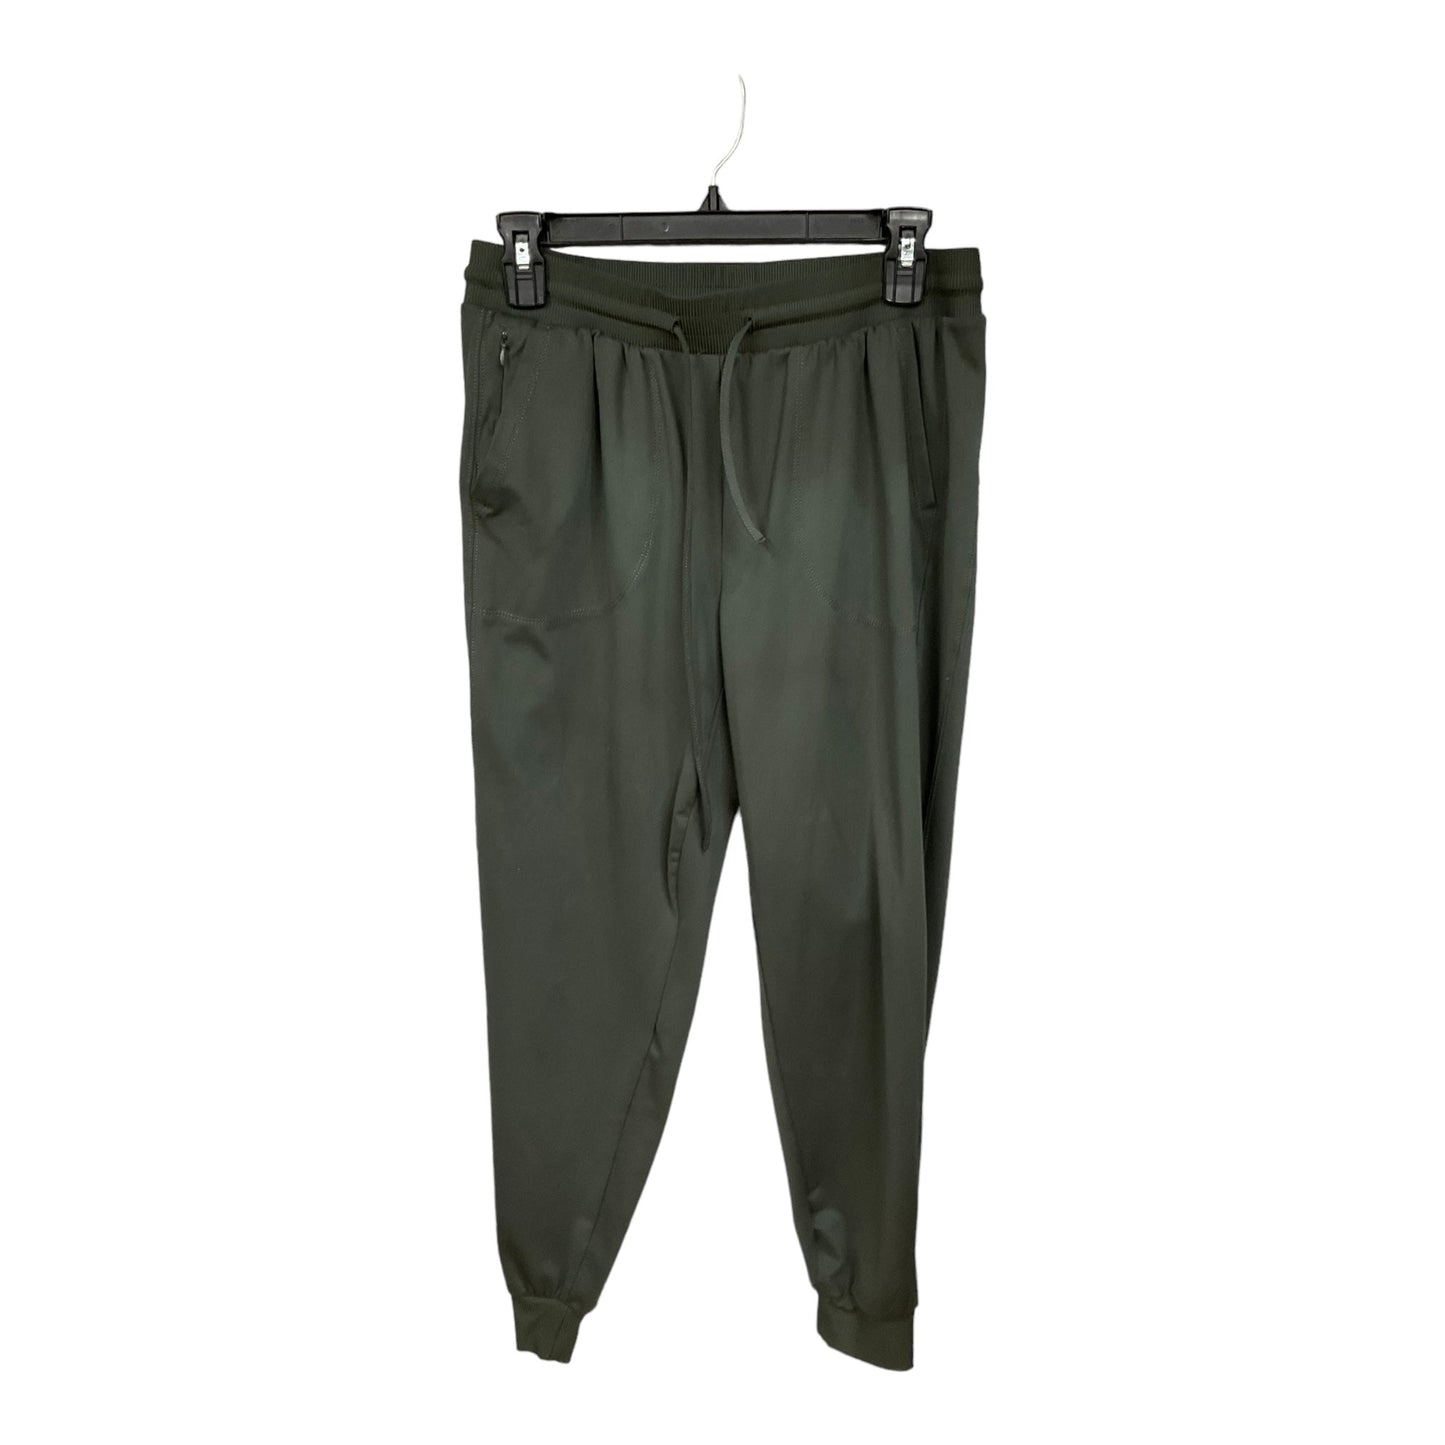 Green Athletic Pants Rachel Zoe, Size M